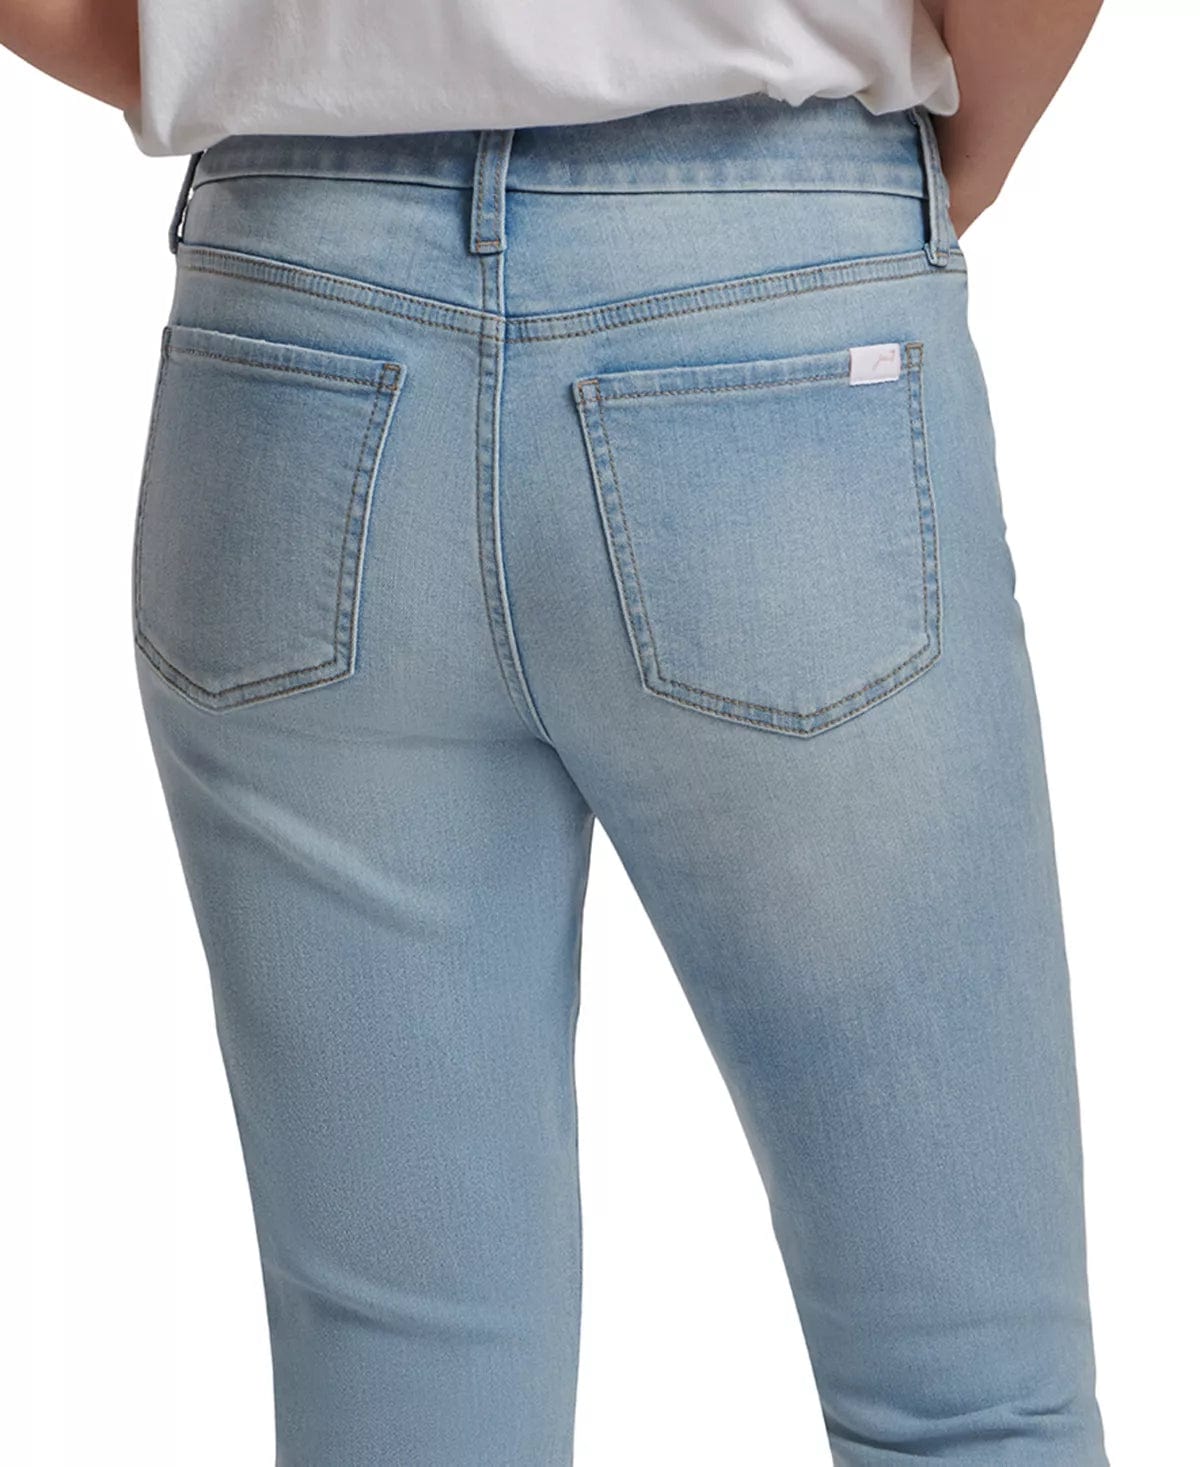 Beyond Marketplace JEN7 - Women's Cropped Kick-Flare Jeans